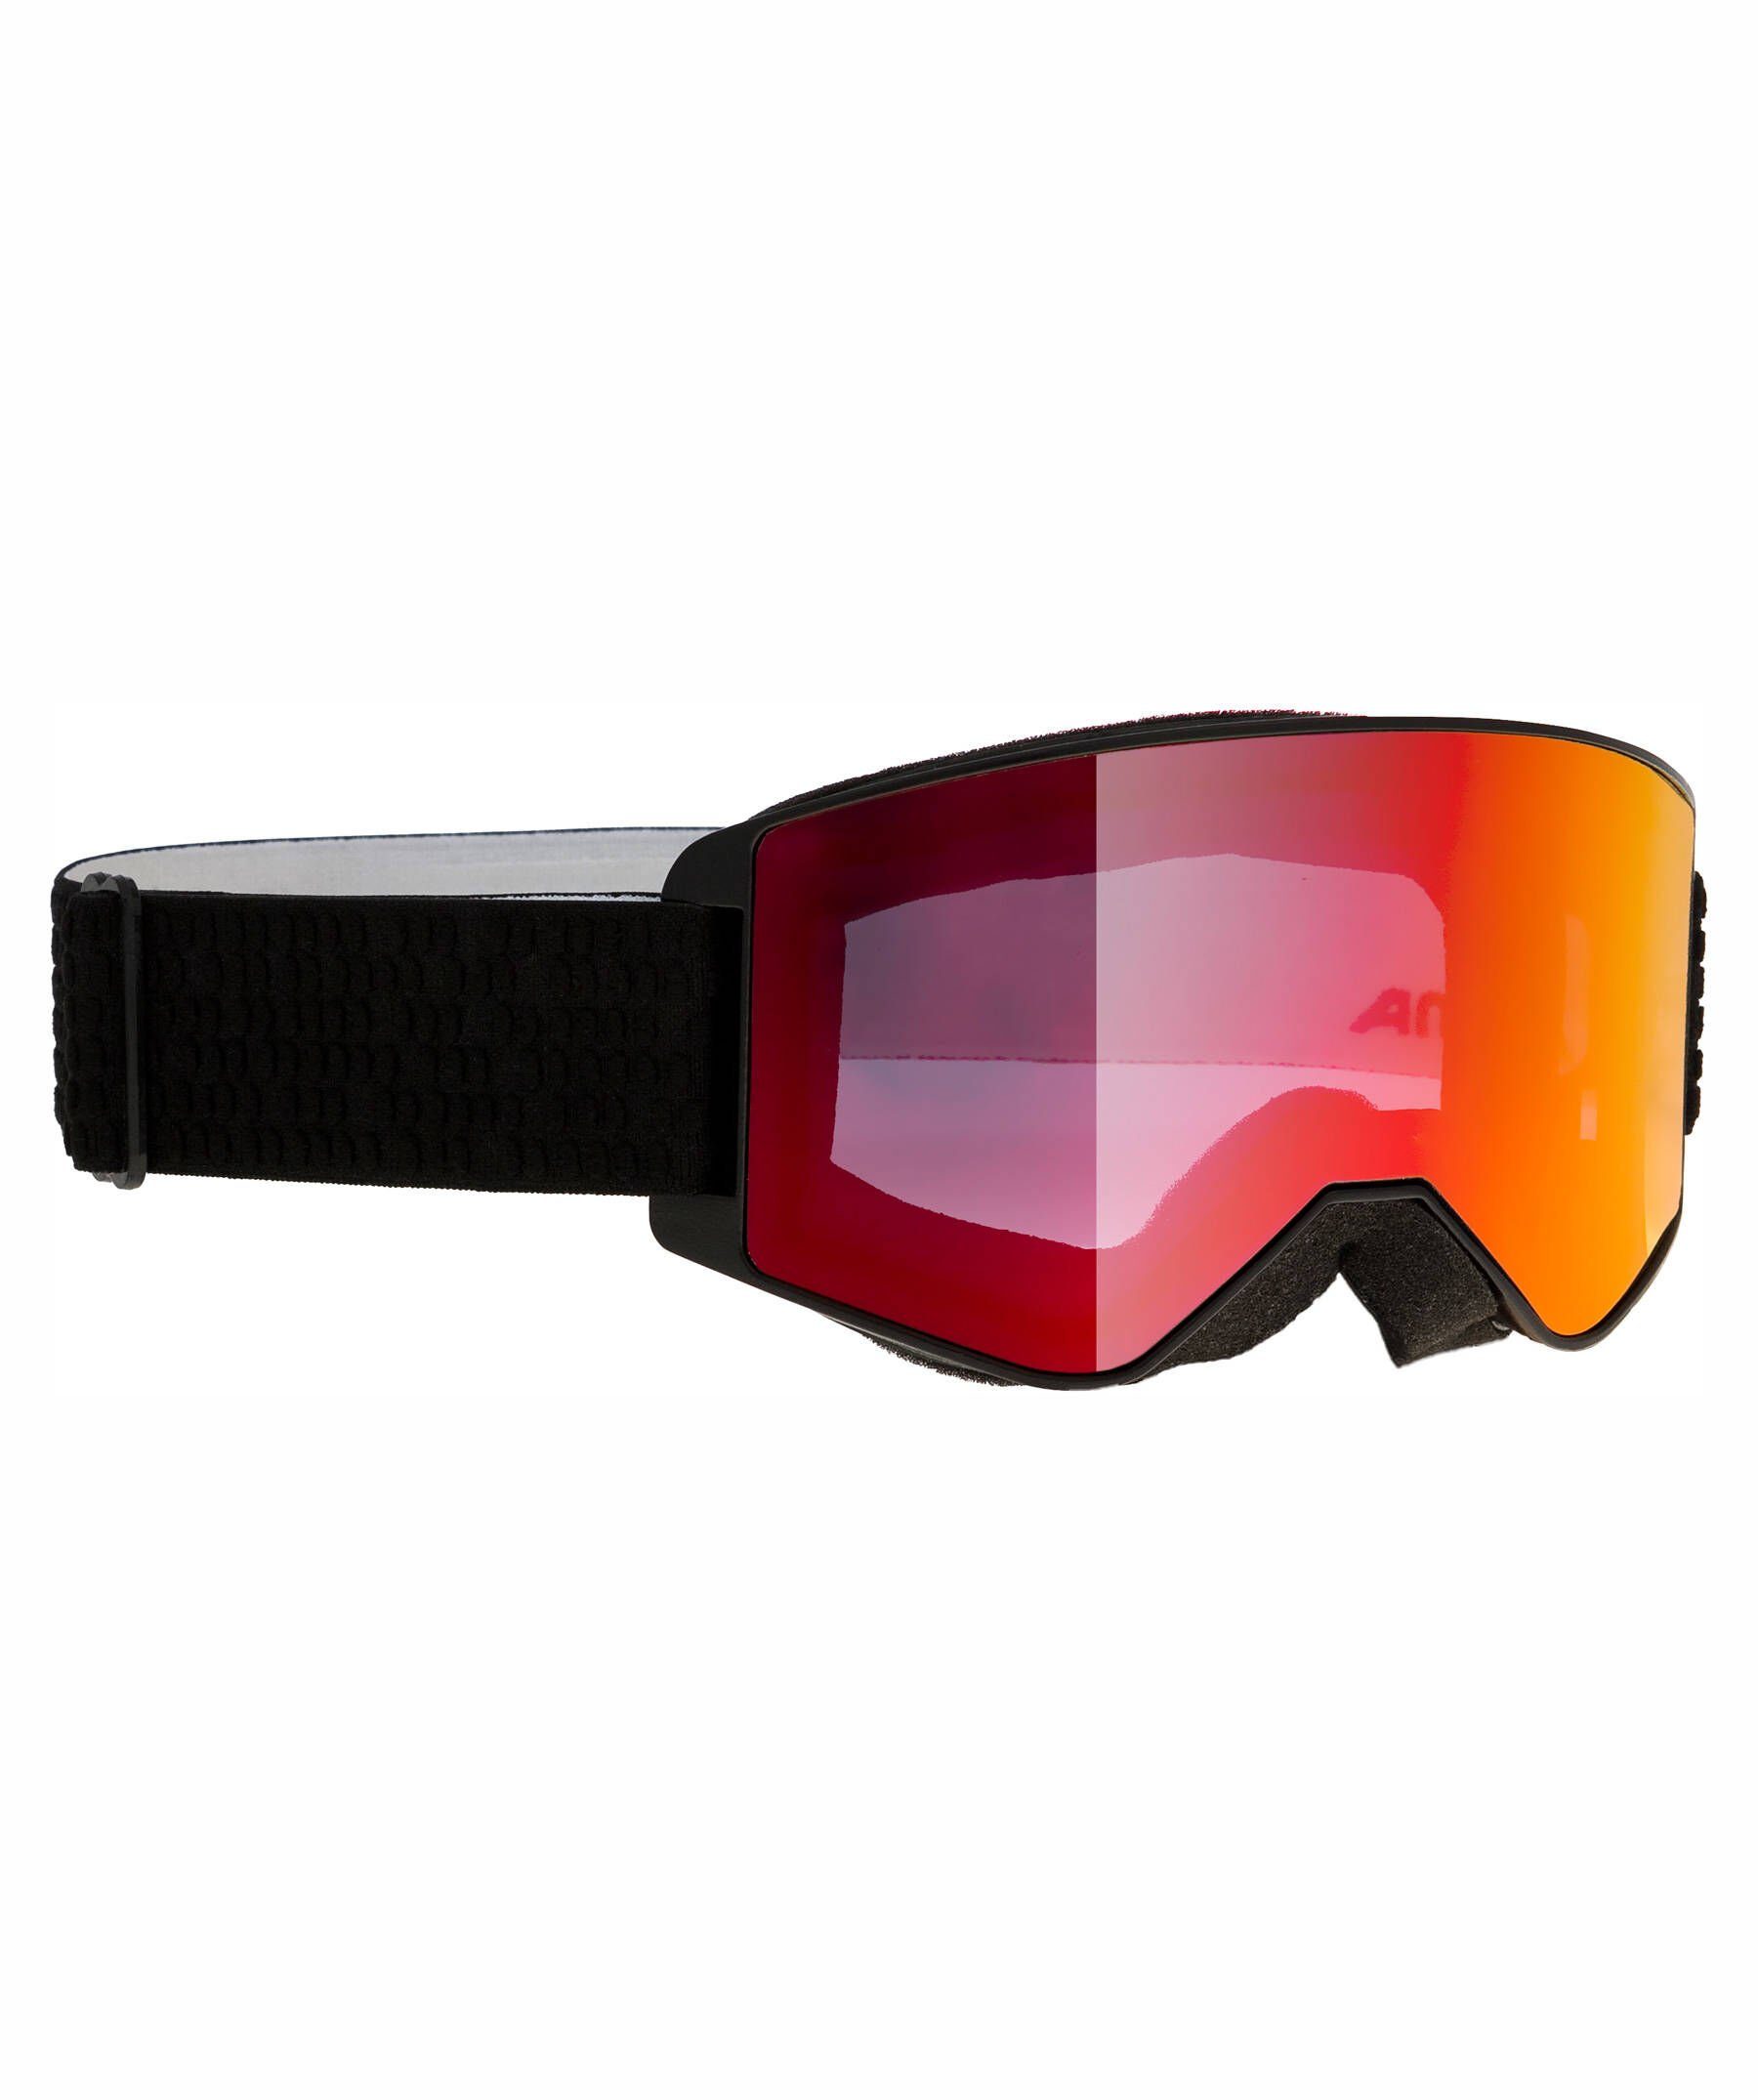 Skibrille schwarz/orange "Narkoja" Alpina (704) Sports Skibrille